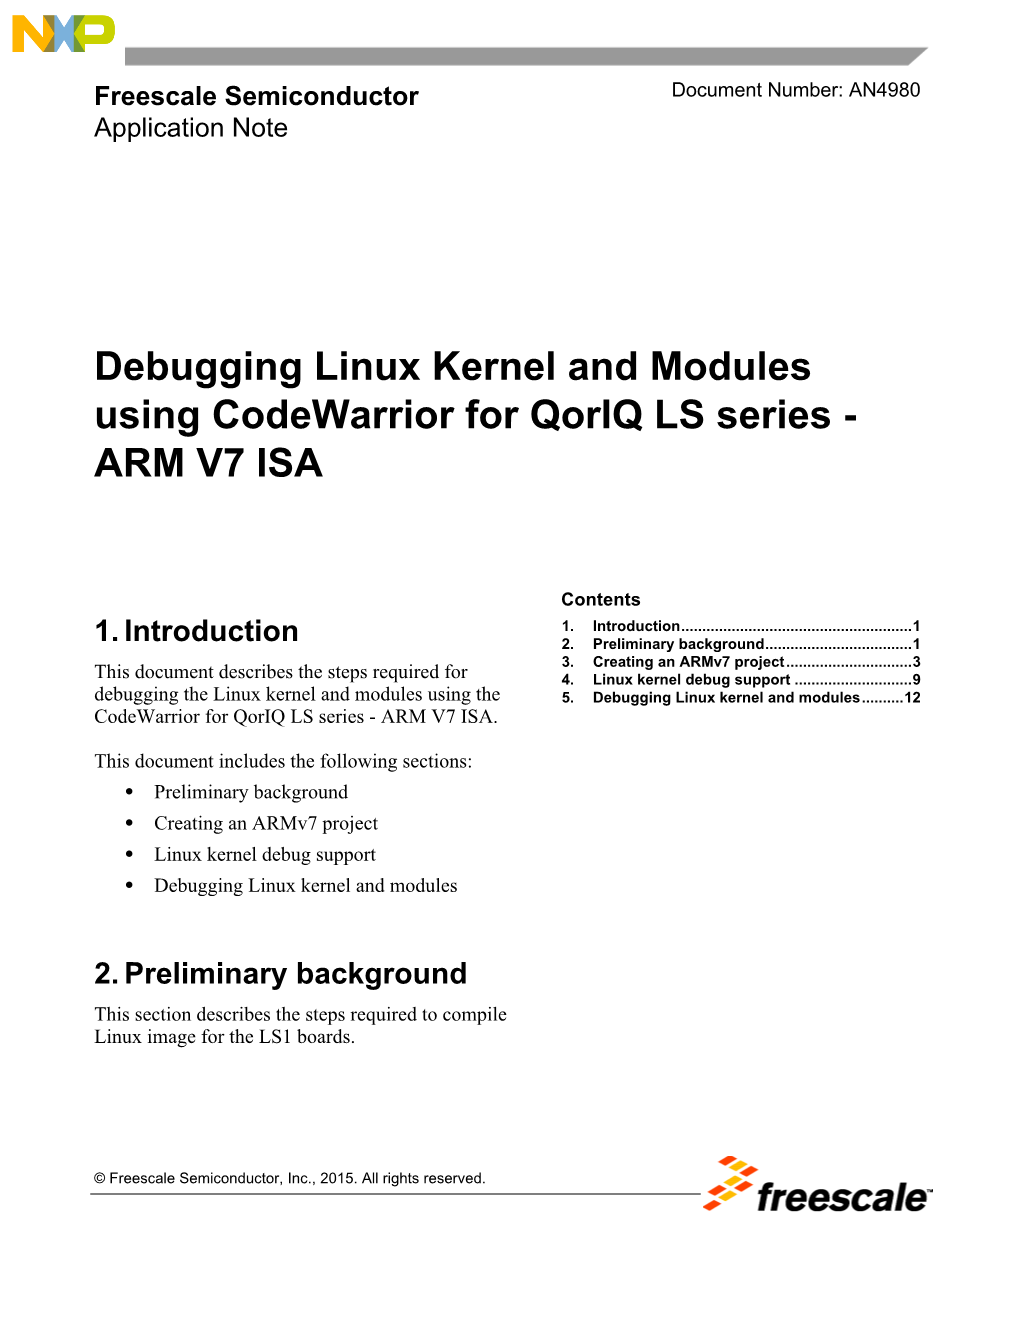 Debugging Linux Kernel and Modules Using Codewarrior for Qoriq LS Series - ARM V7 ISA